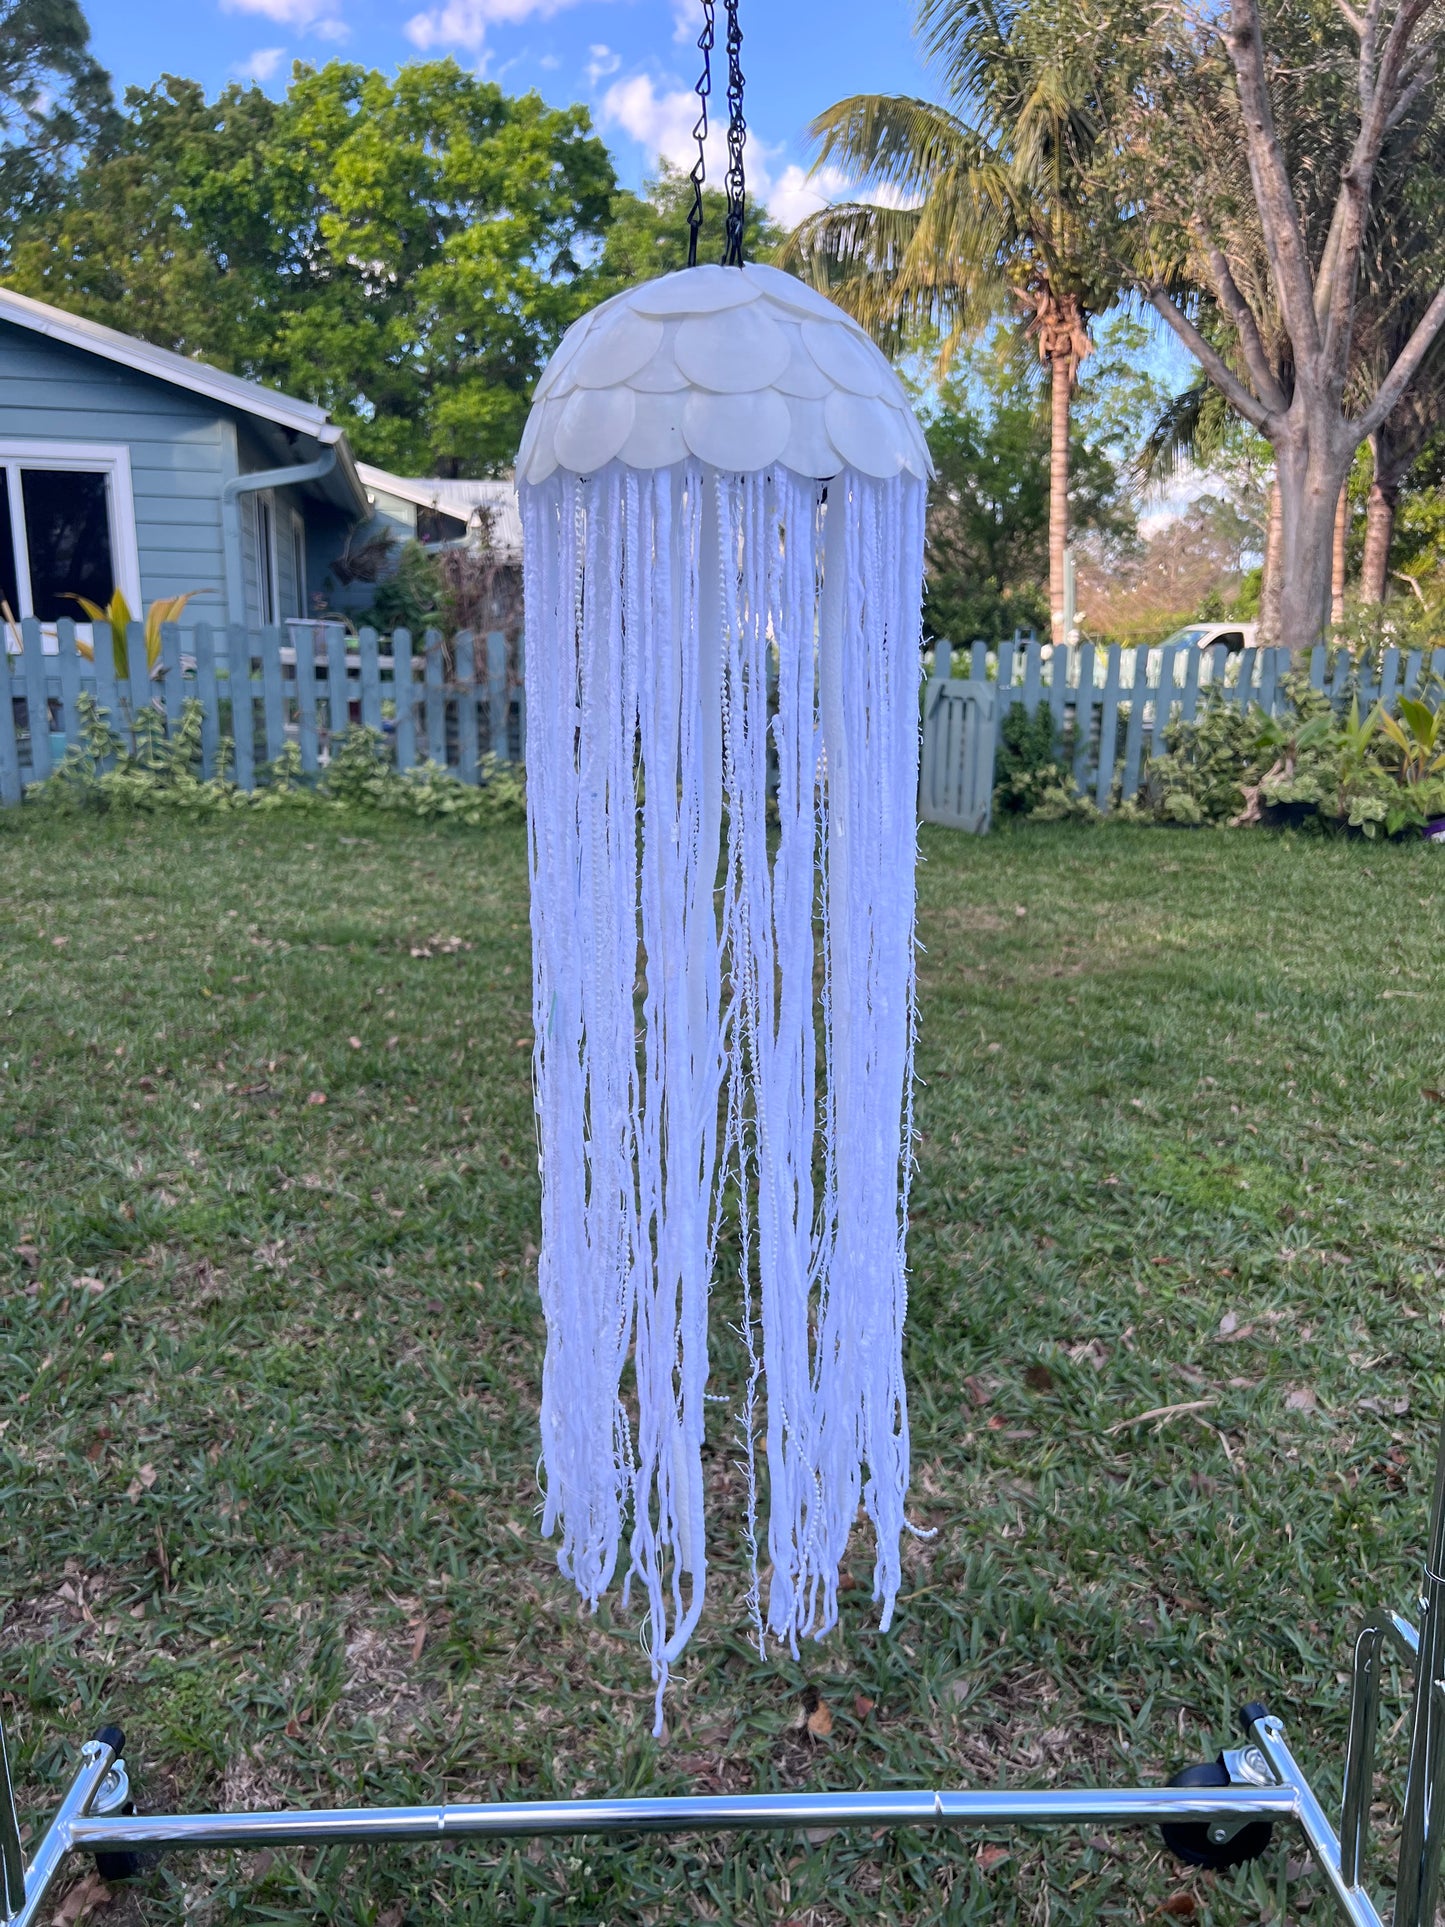 Jellyfish Lantern Small (White & Pearls)